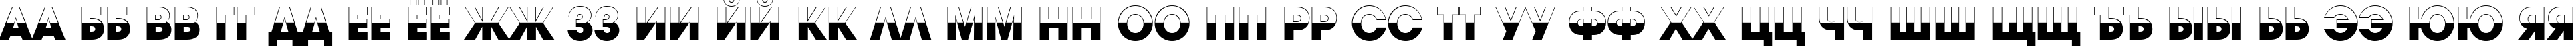 Пример написания русского алфавита шрифтом a_AvanteTitulB&W Heavy